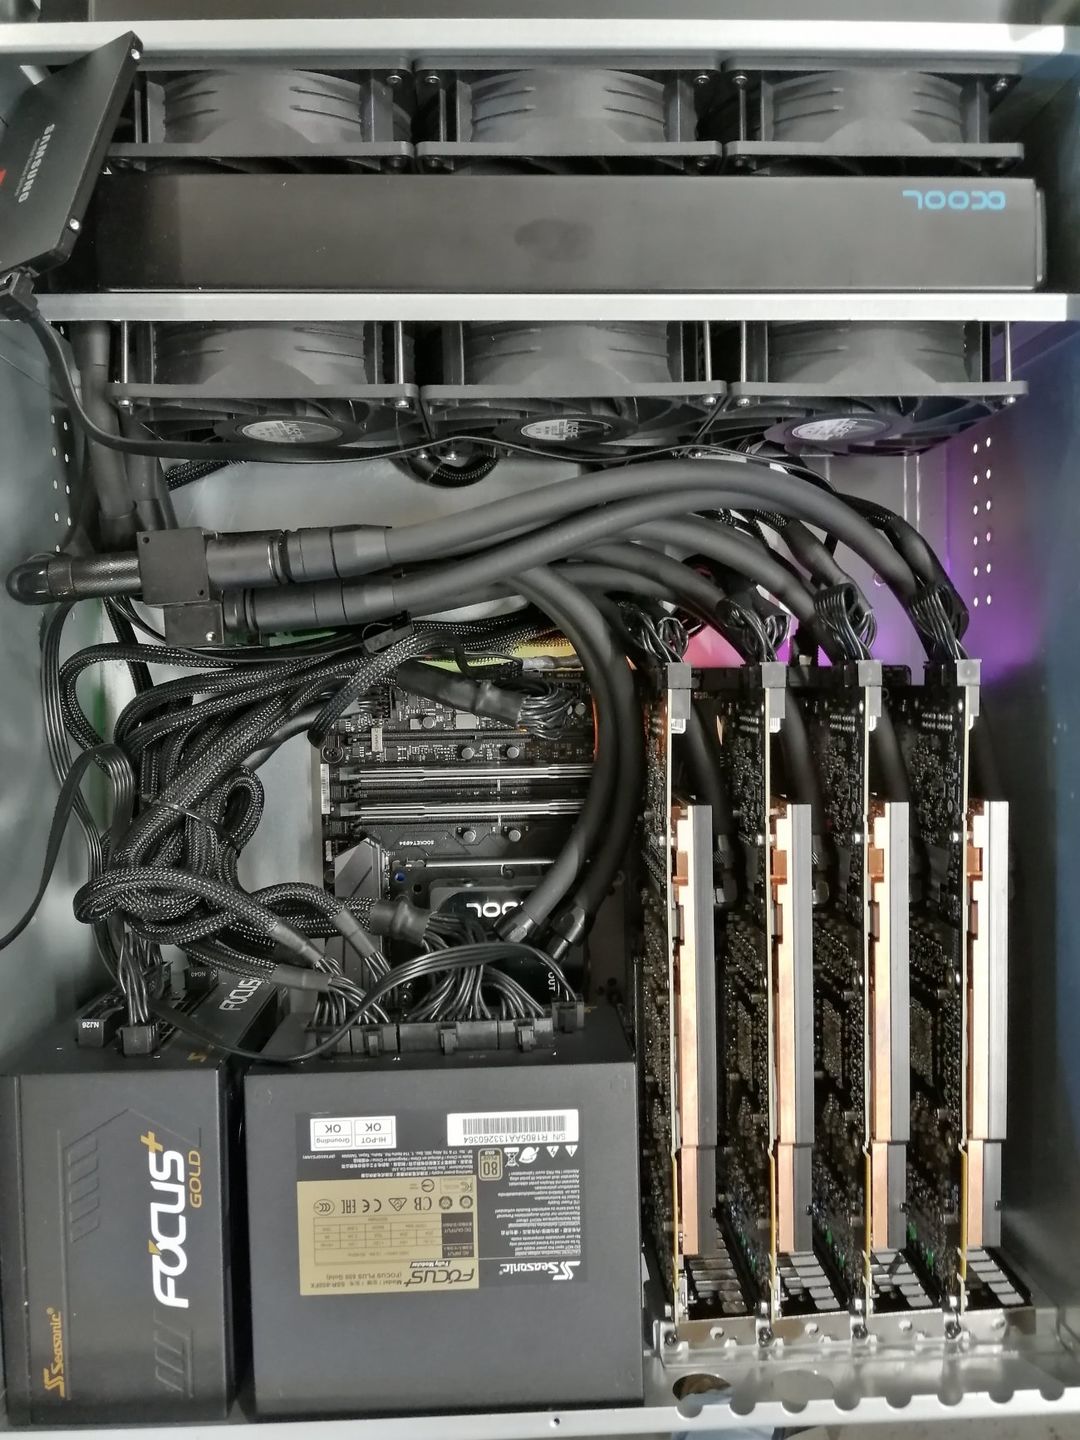 OI λύσεις υδρόψυξης για server υψηλής πυκνότητας στη CES 2020 - Φωτογραφία 1